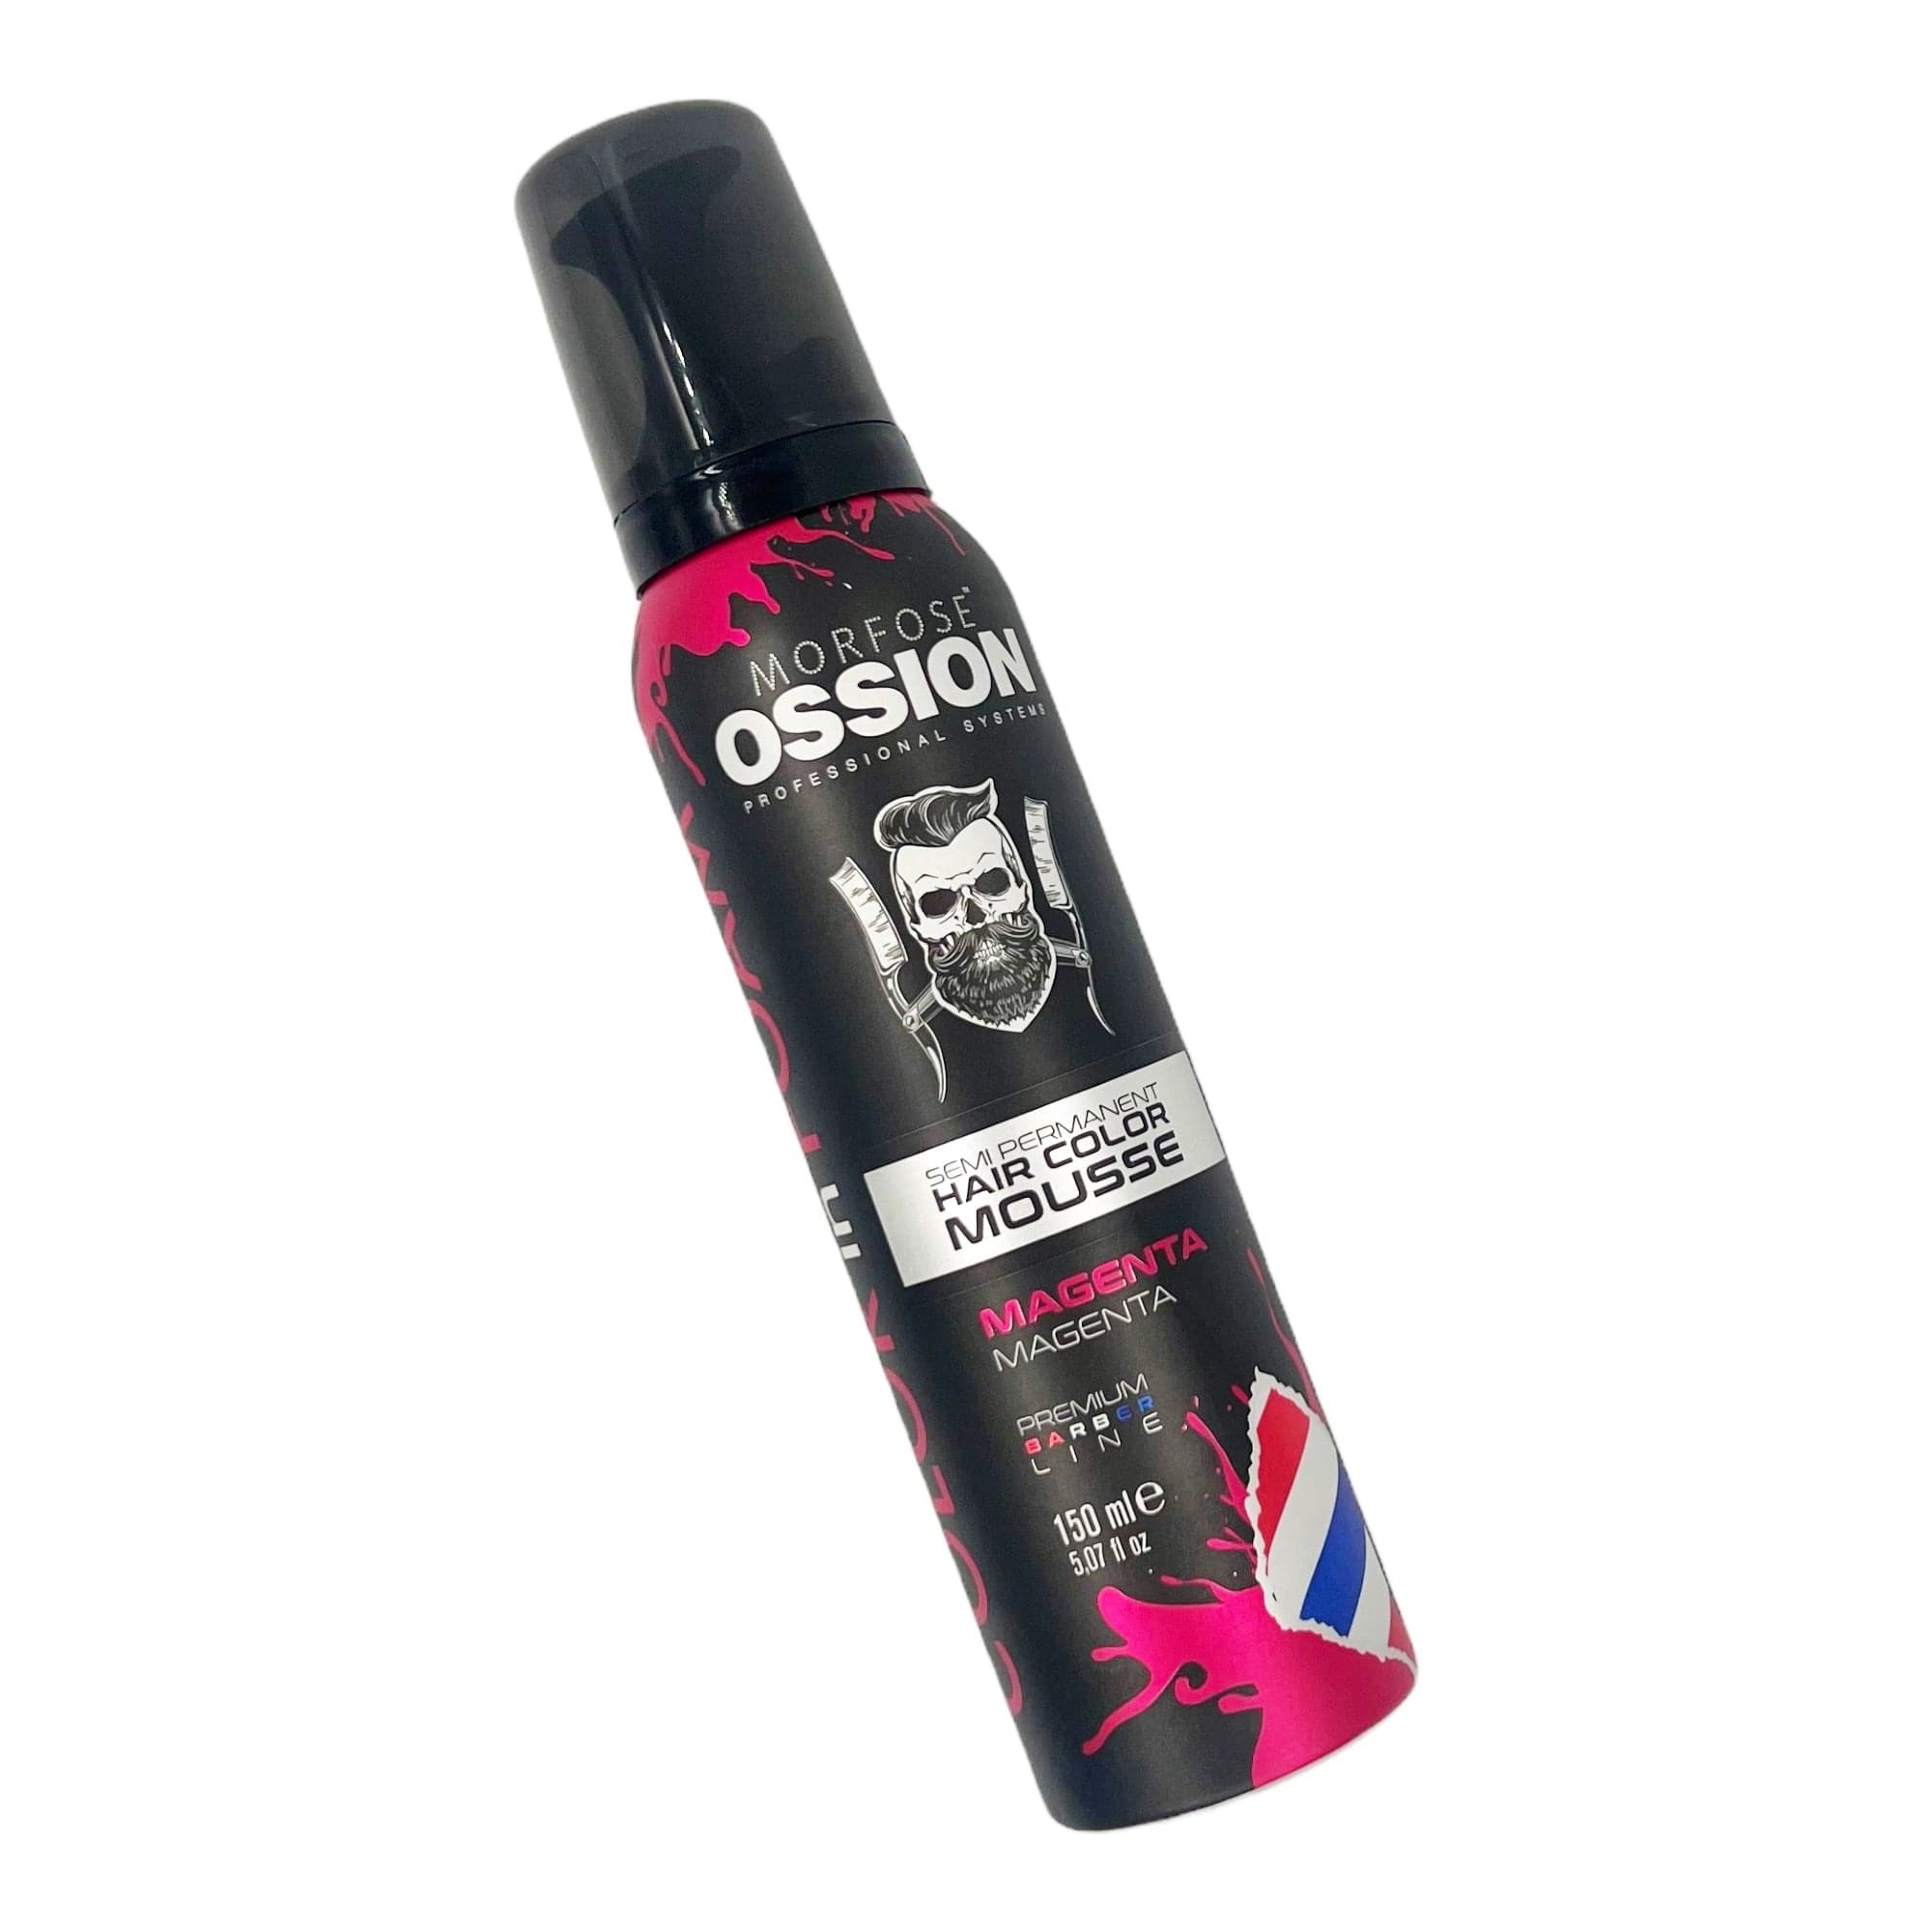 Morfose - Ossion Semi Permanent Hair Colour Mousse Magenta 150ml